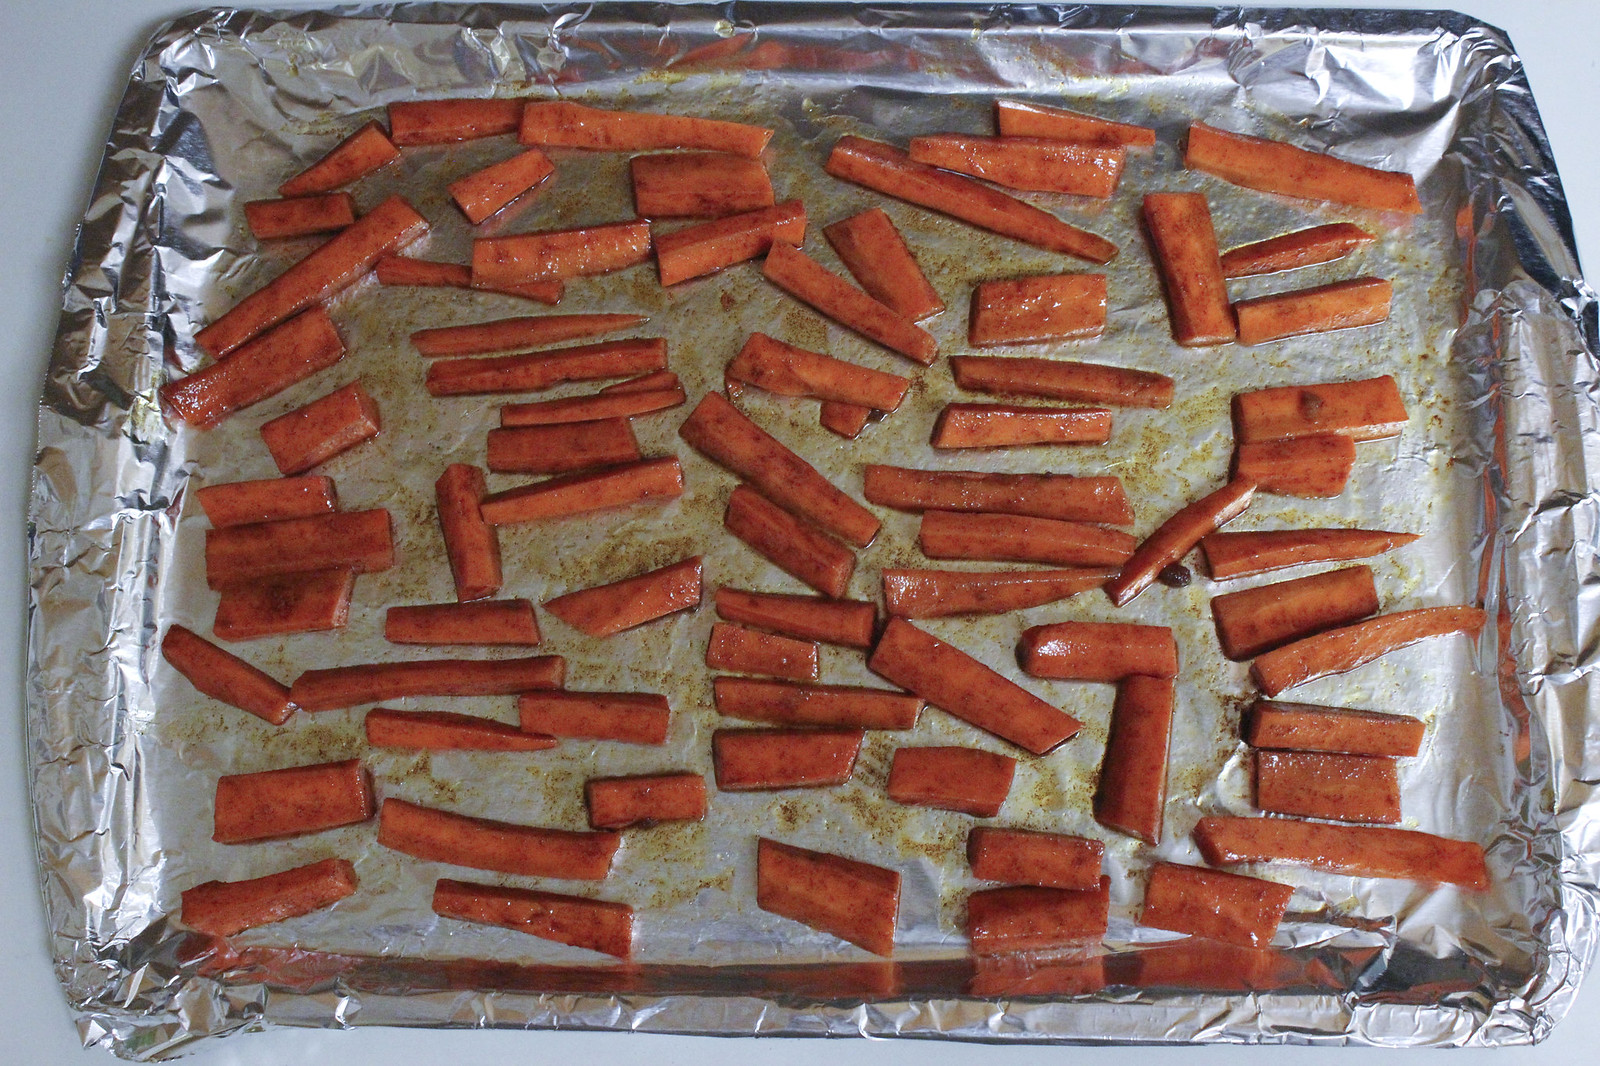 Sweet carrot fries